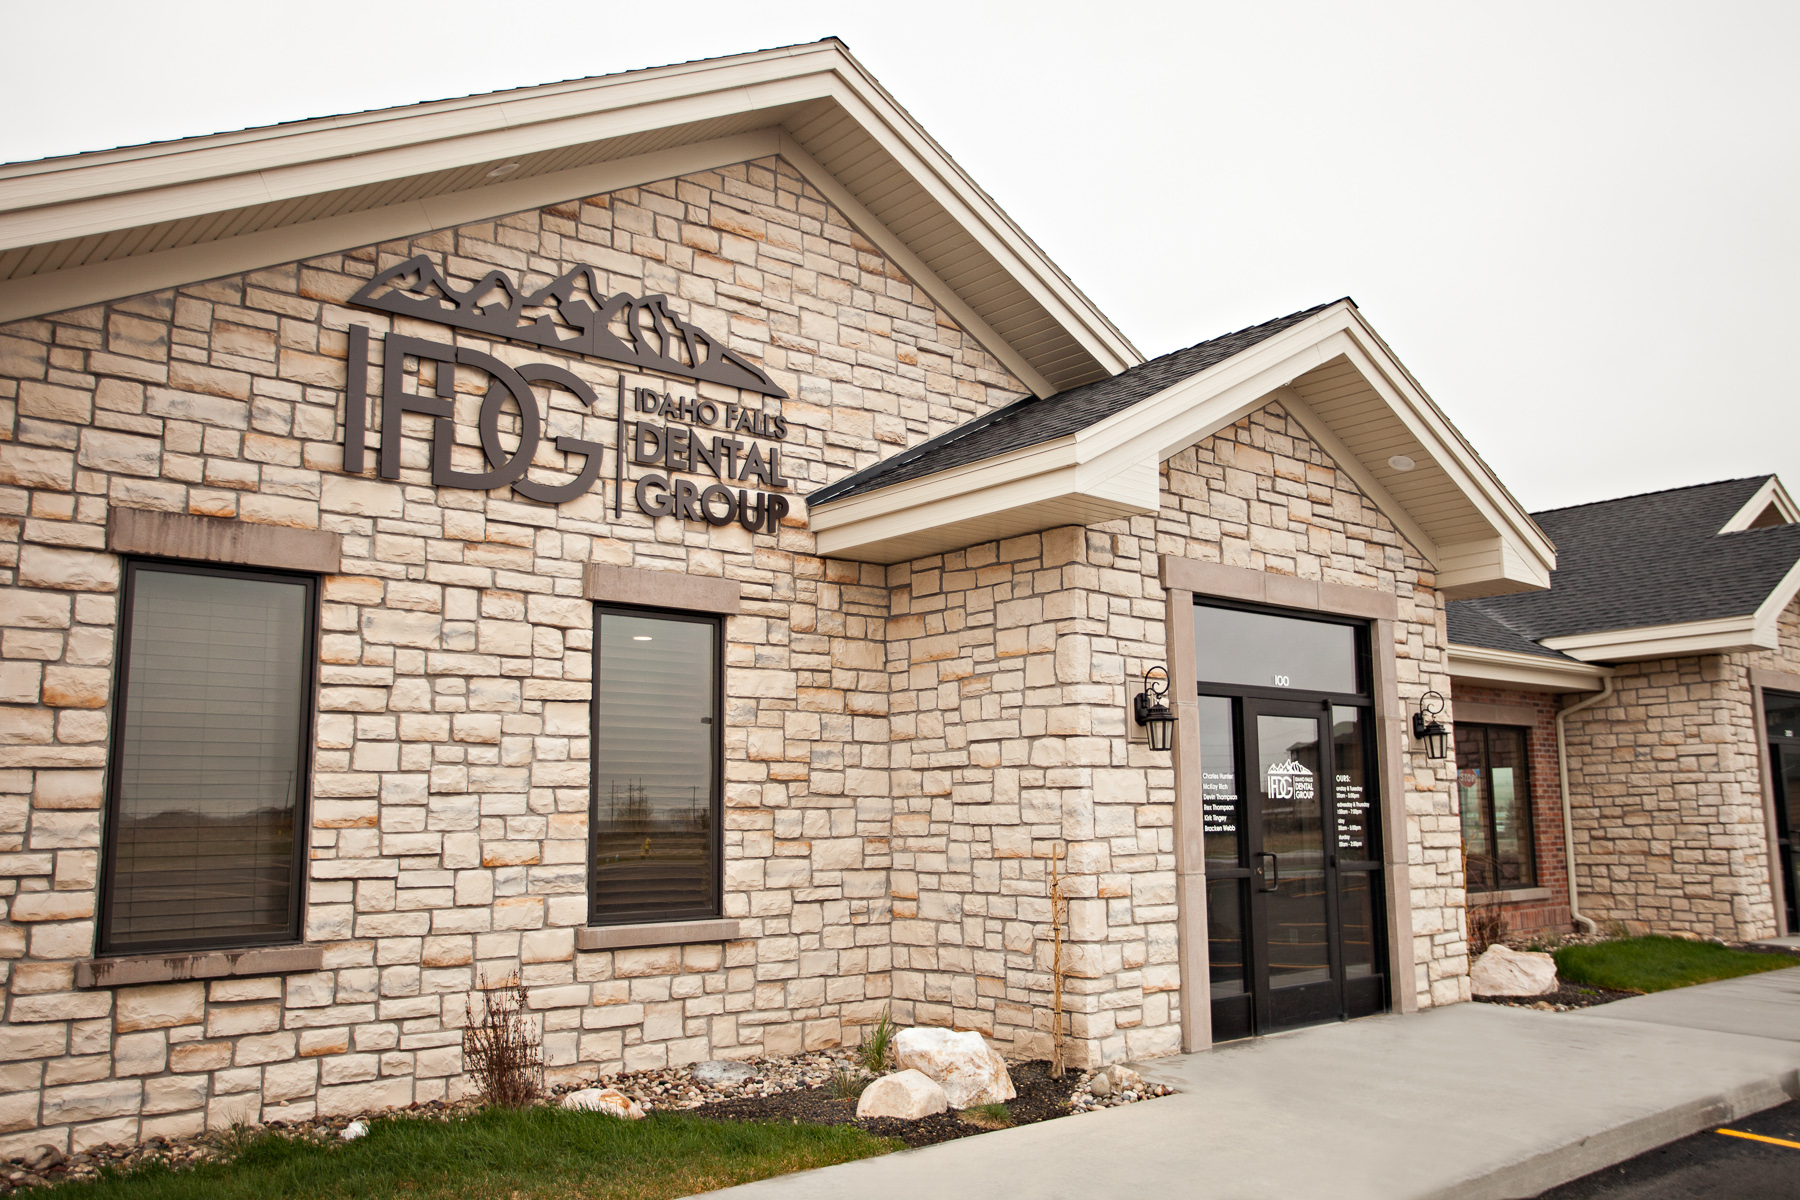 Rich L McKay, DDS: Idaho Falls Dental Group